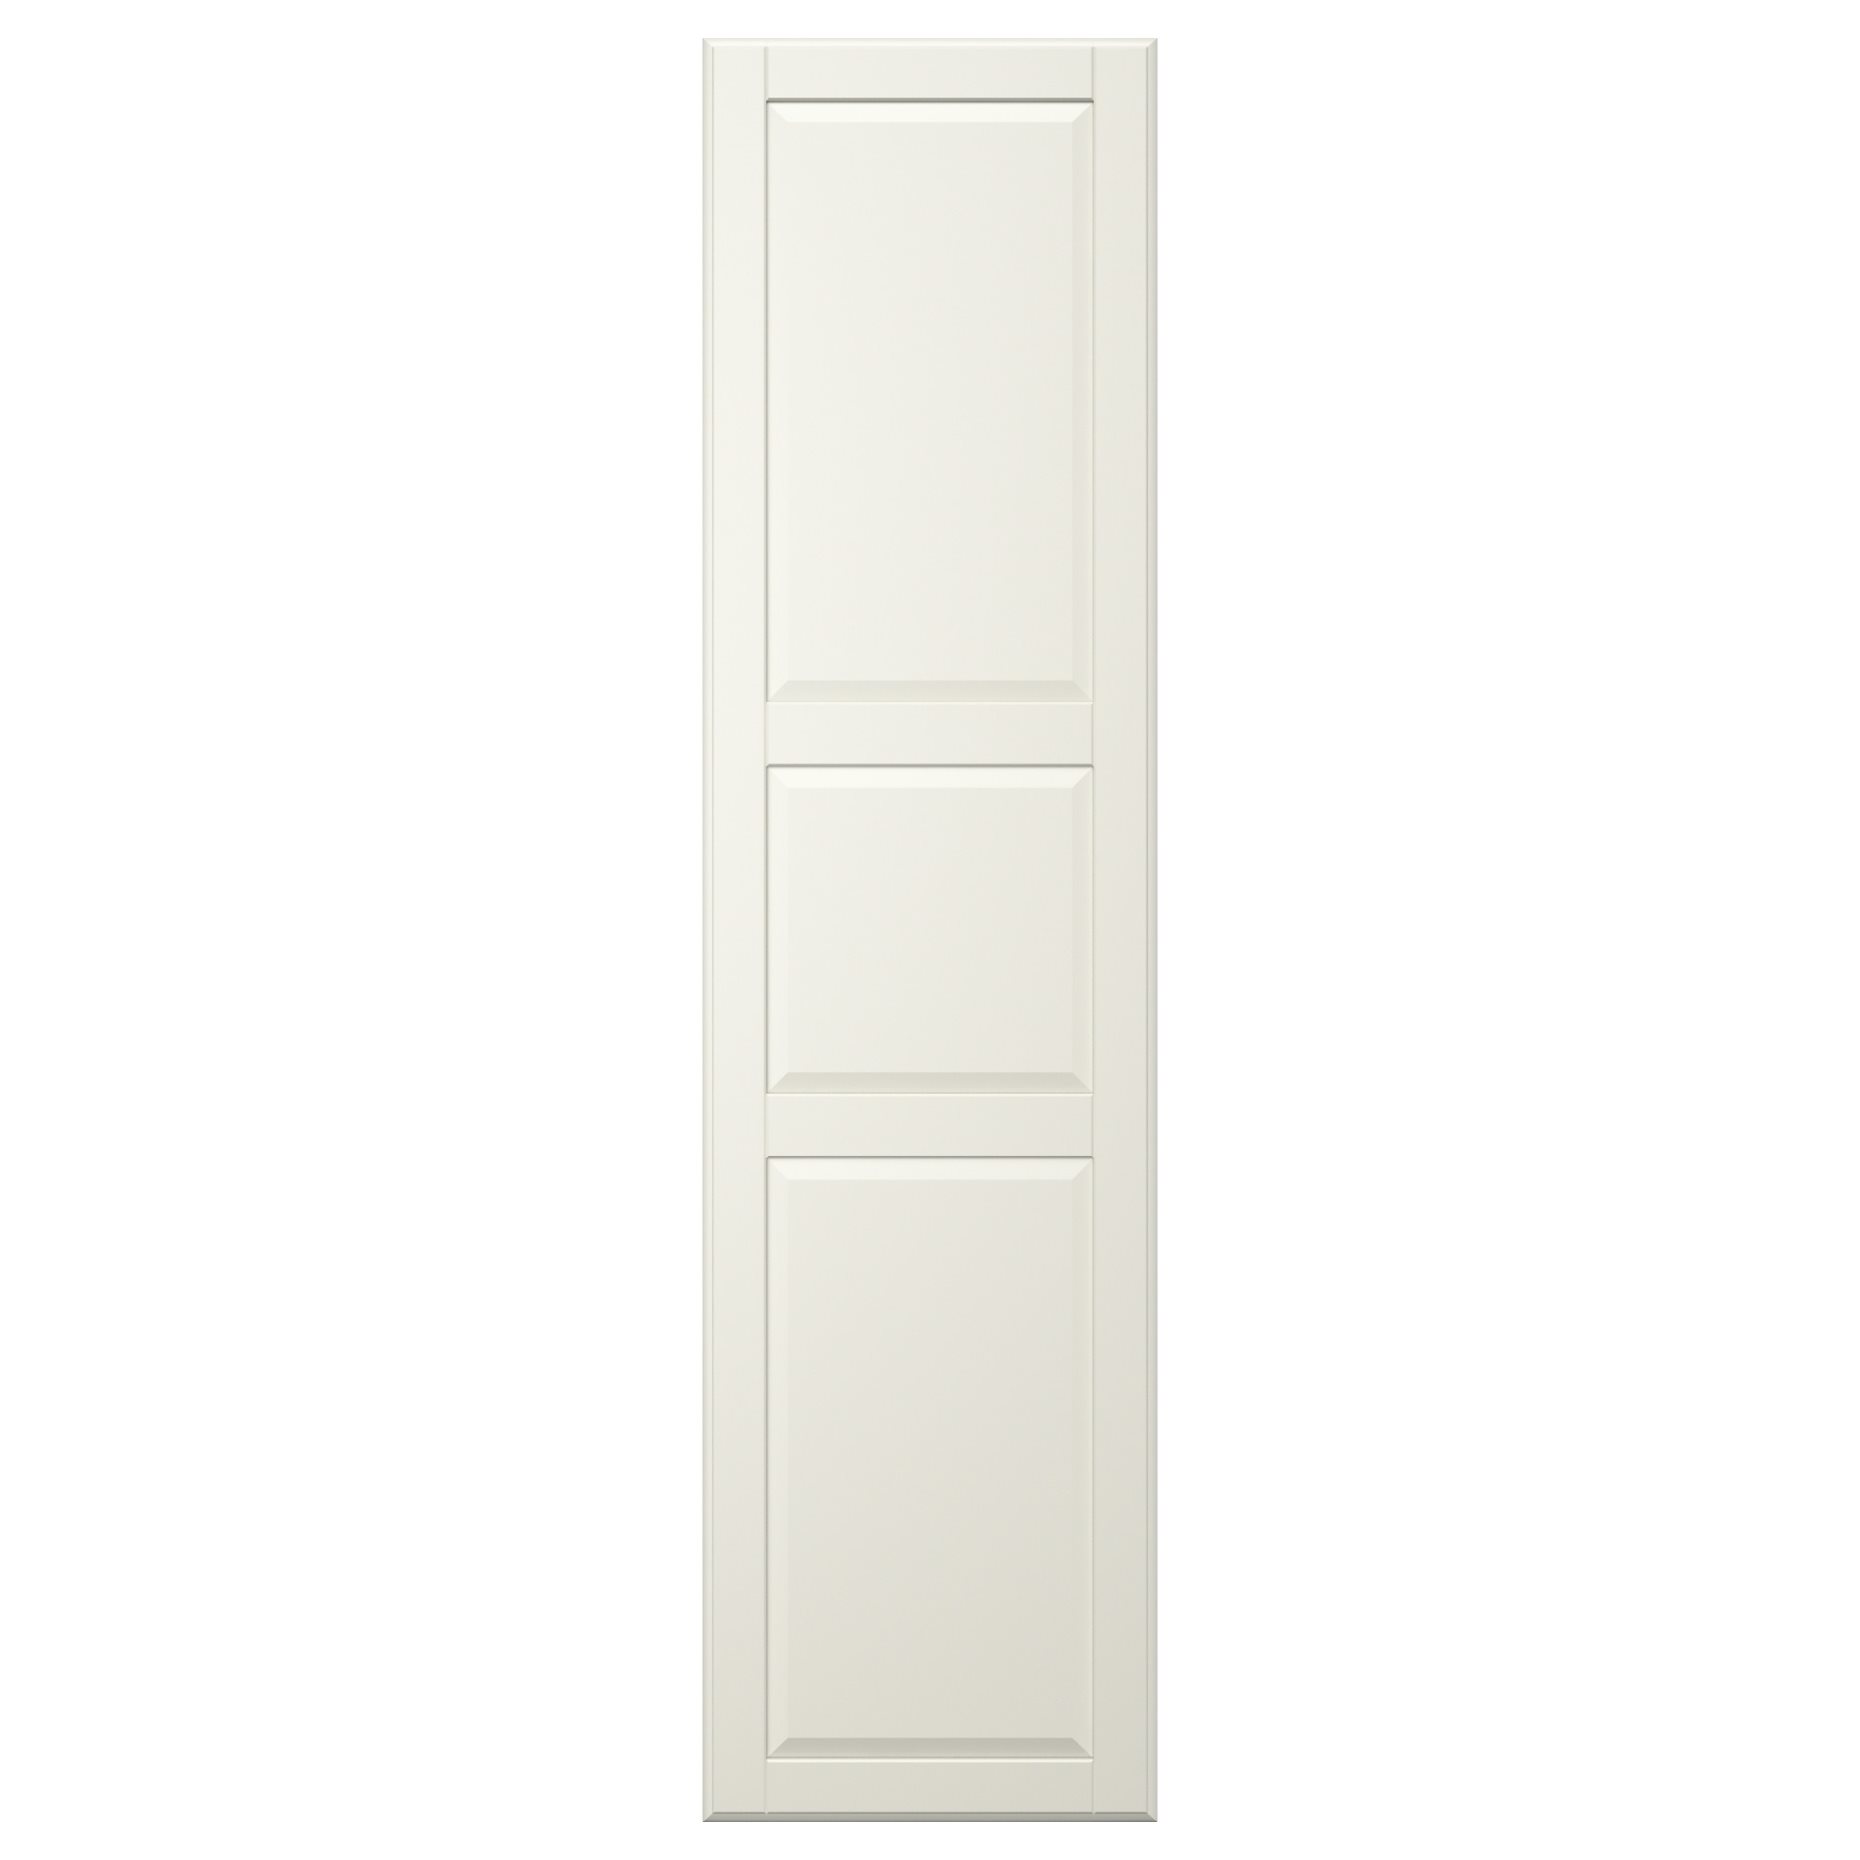 TYSSEDAL, πόρτα, 50x195 cm, 902.981.24